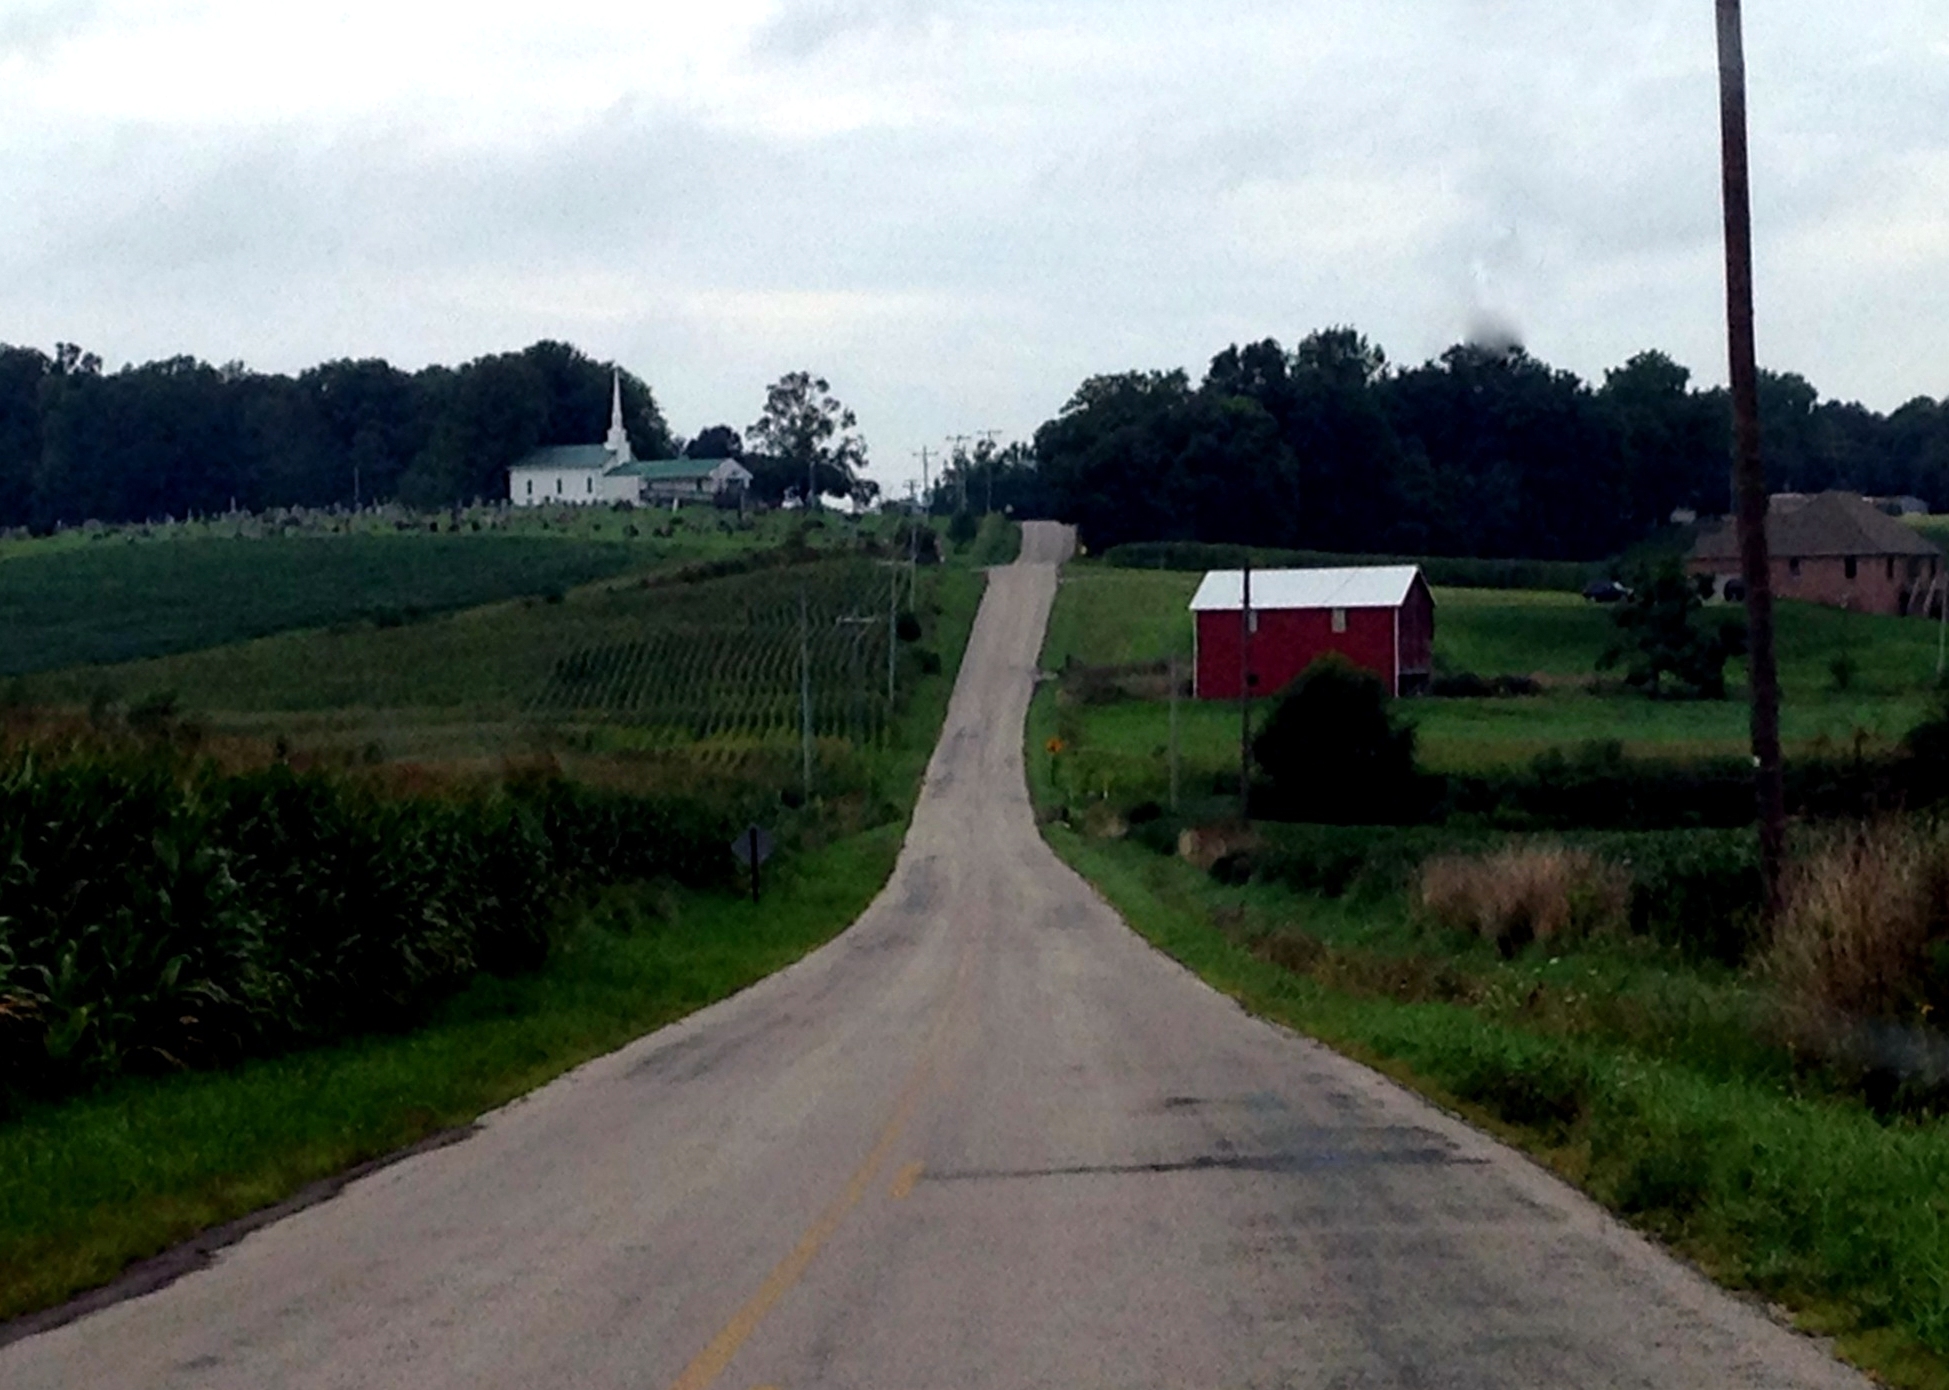 Ohio landscape, 2017